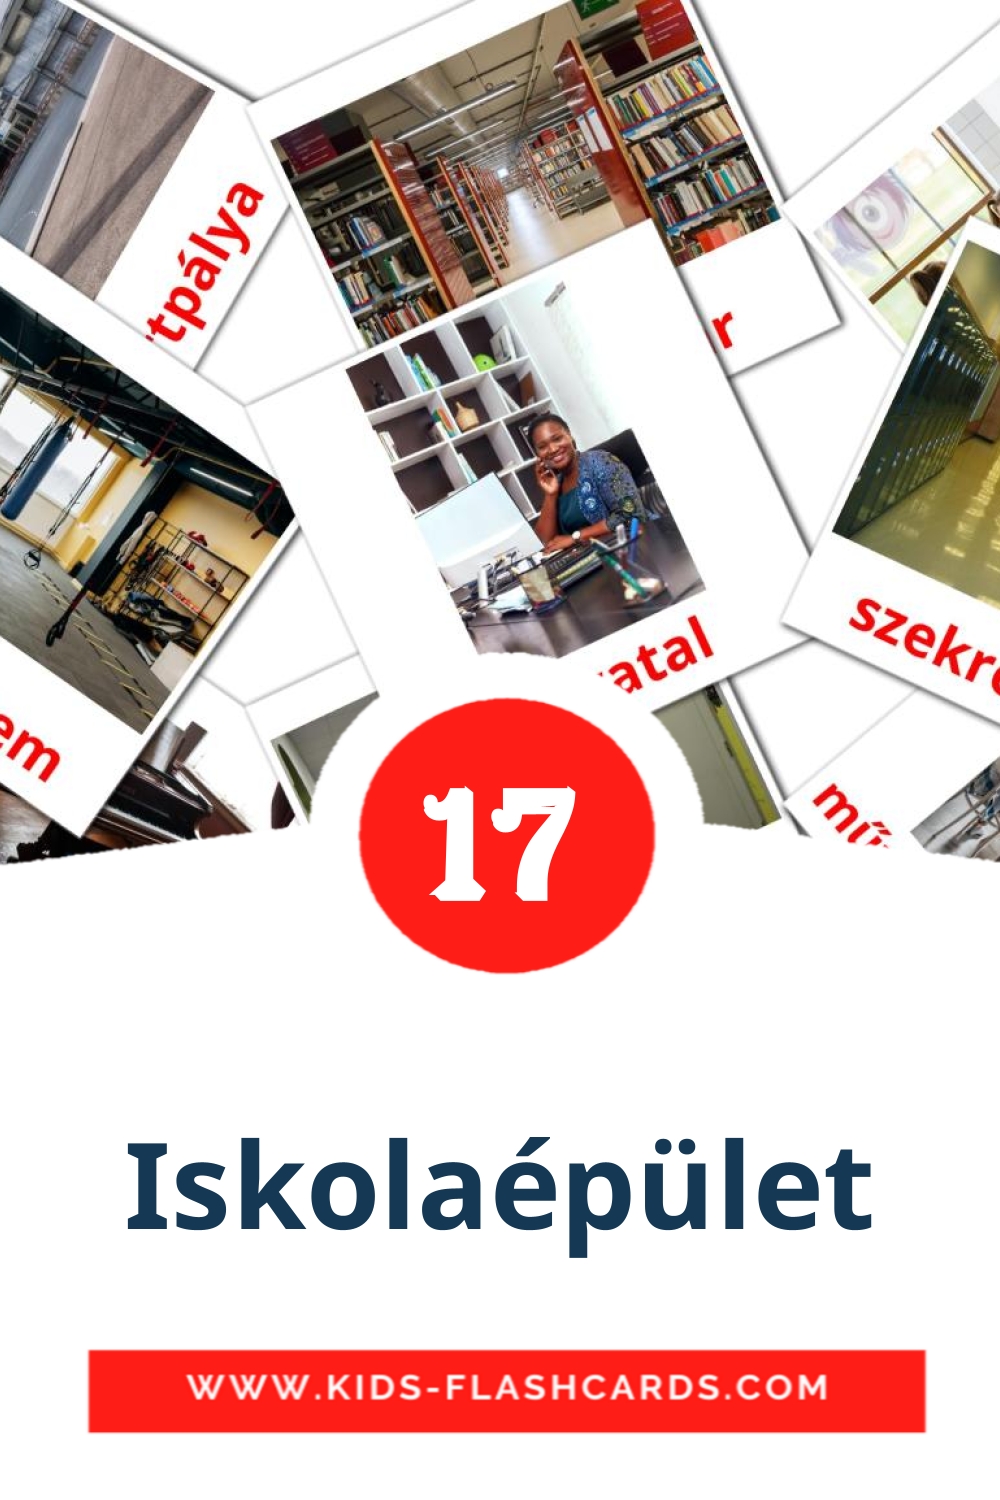 17 carte illustrate di Iskolaépület per la scuola materna in ungherese